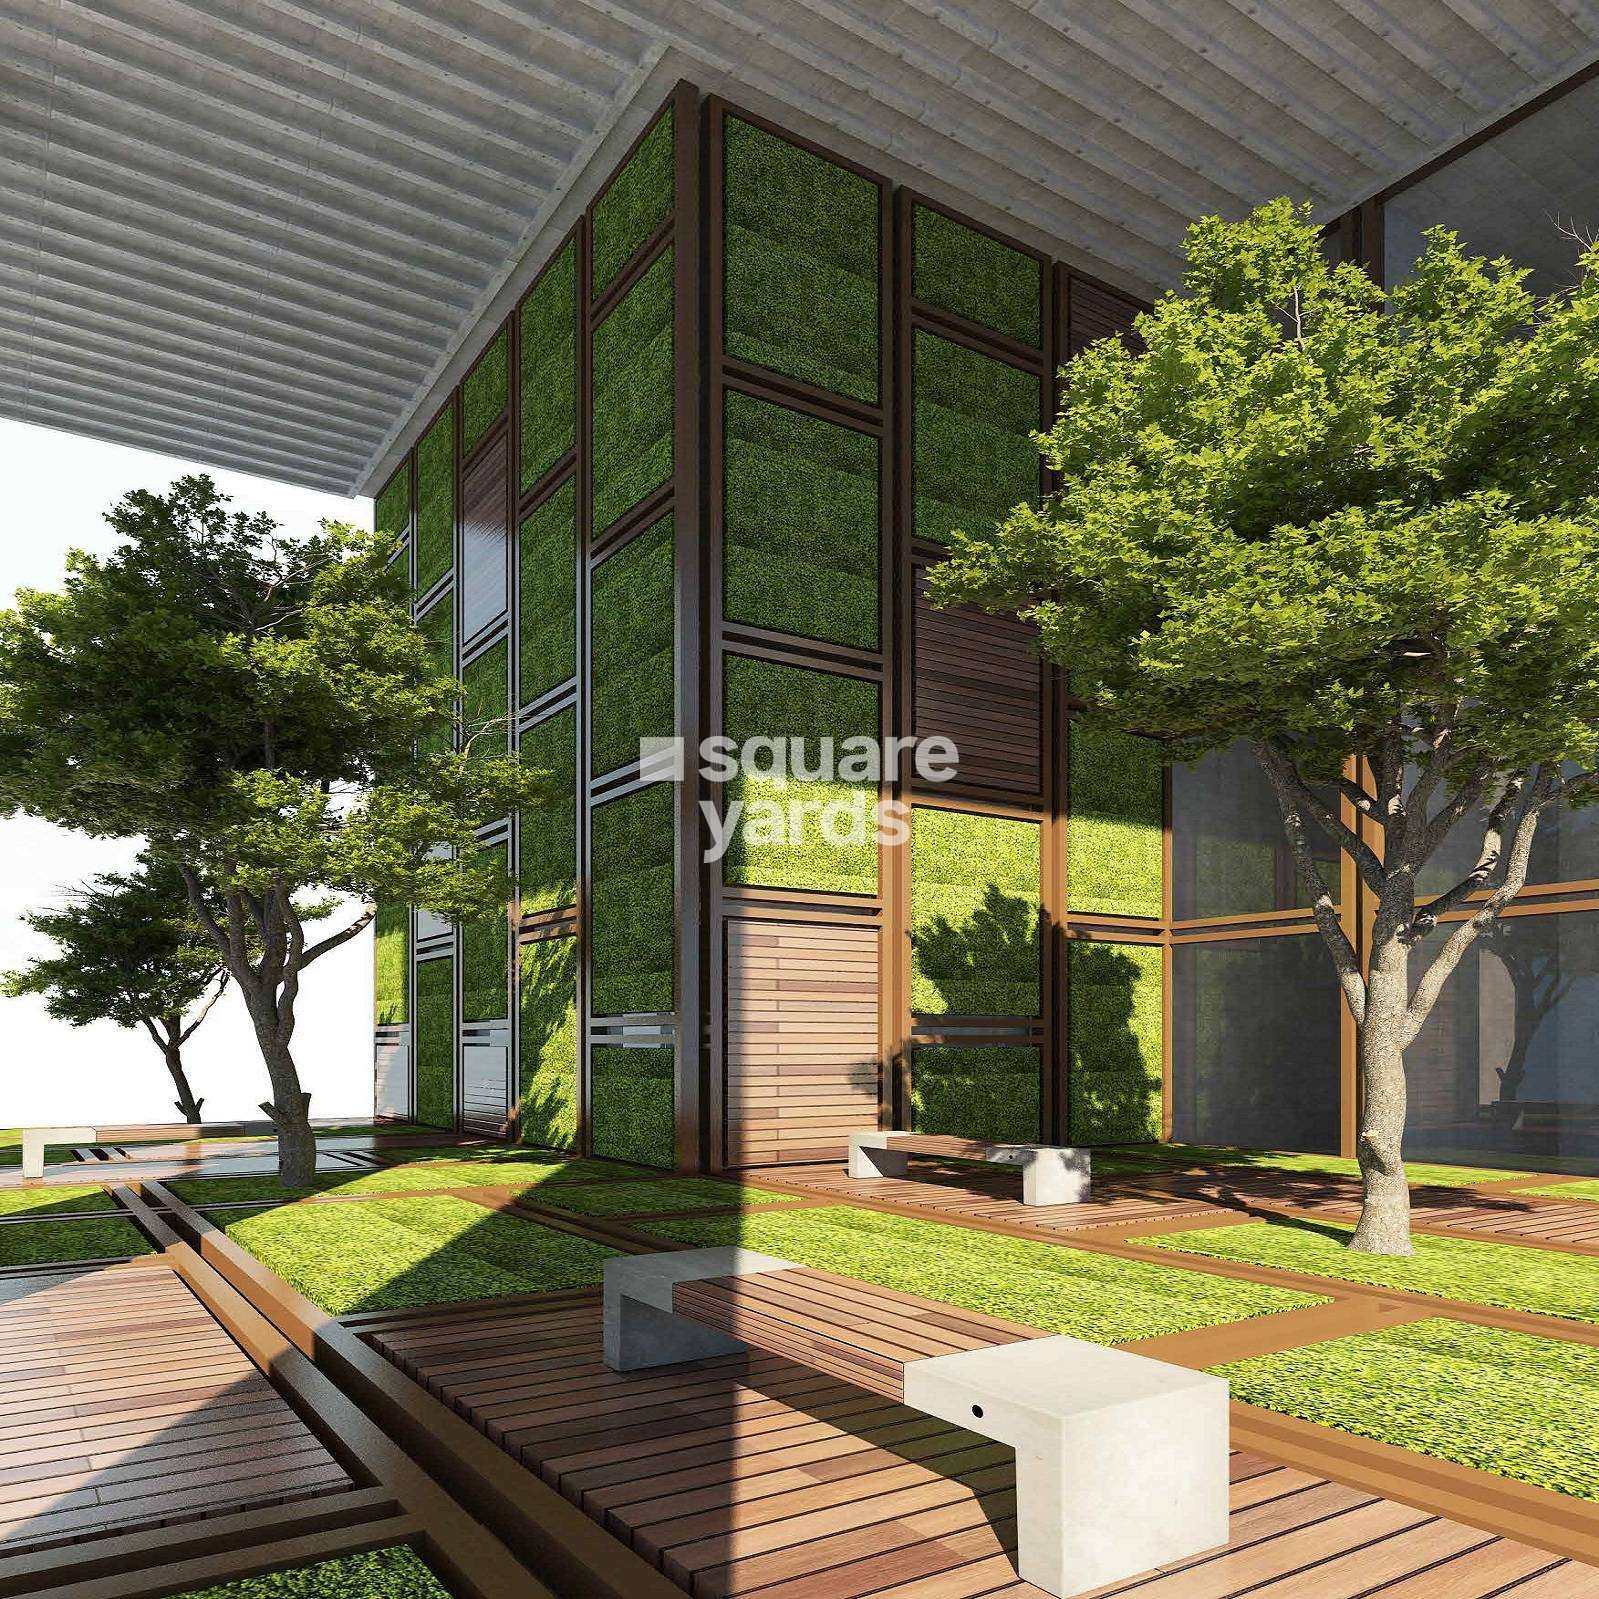 five sences garden 6  project amenities features1